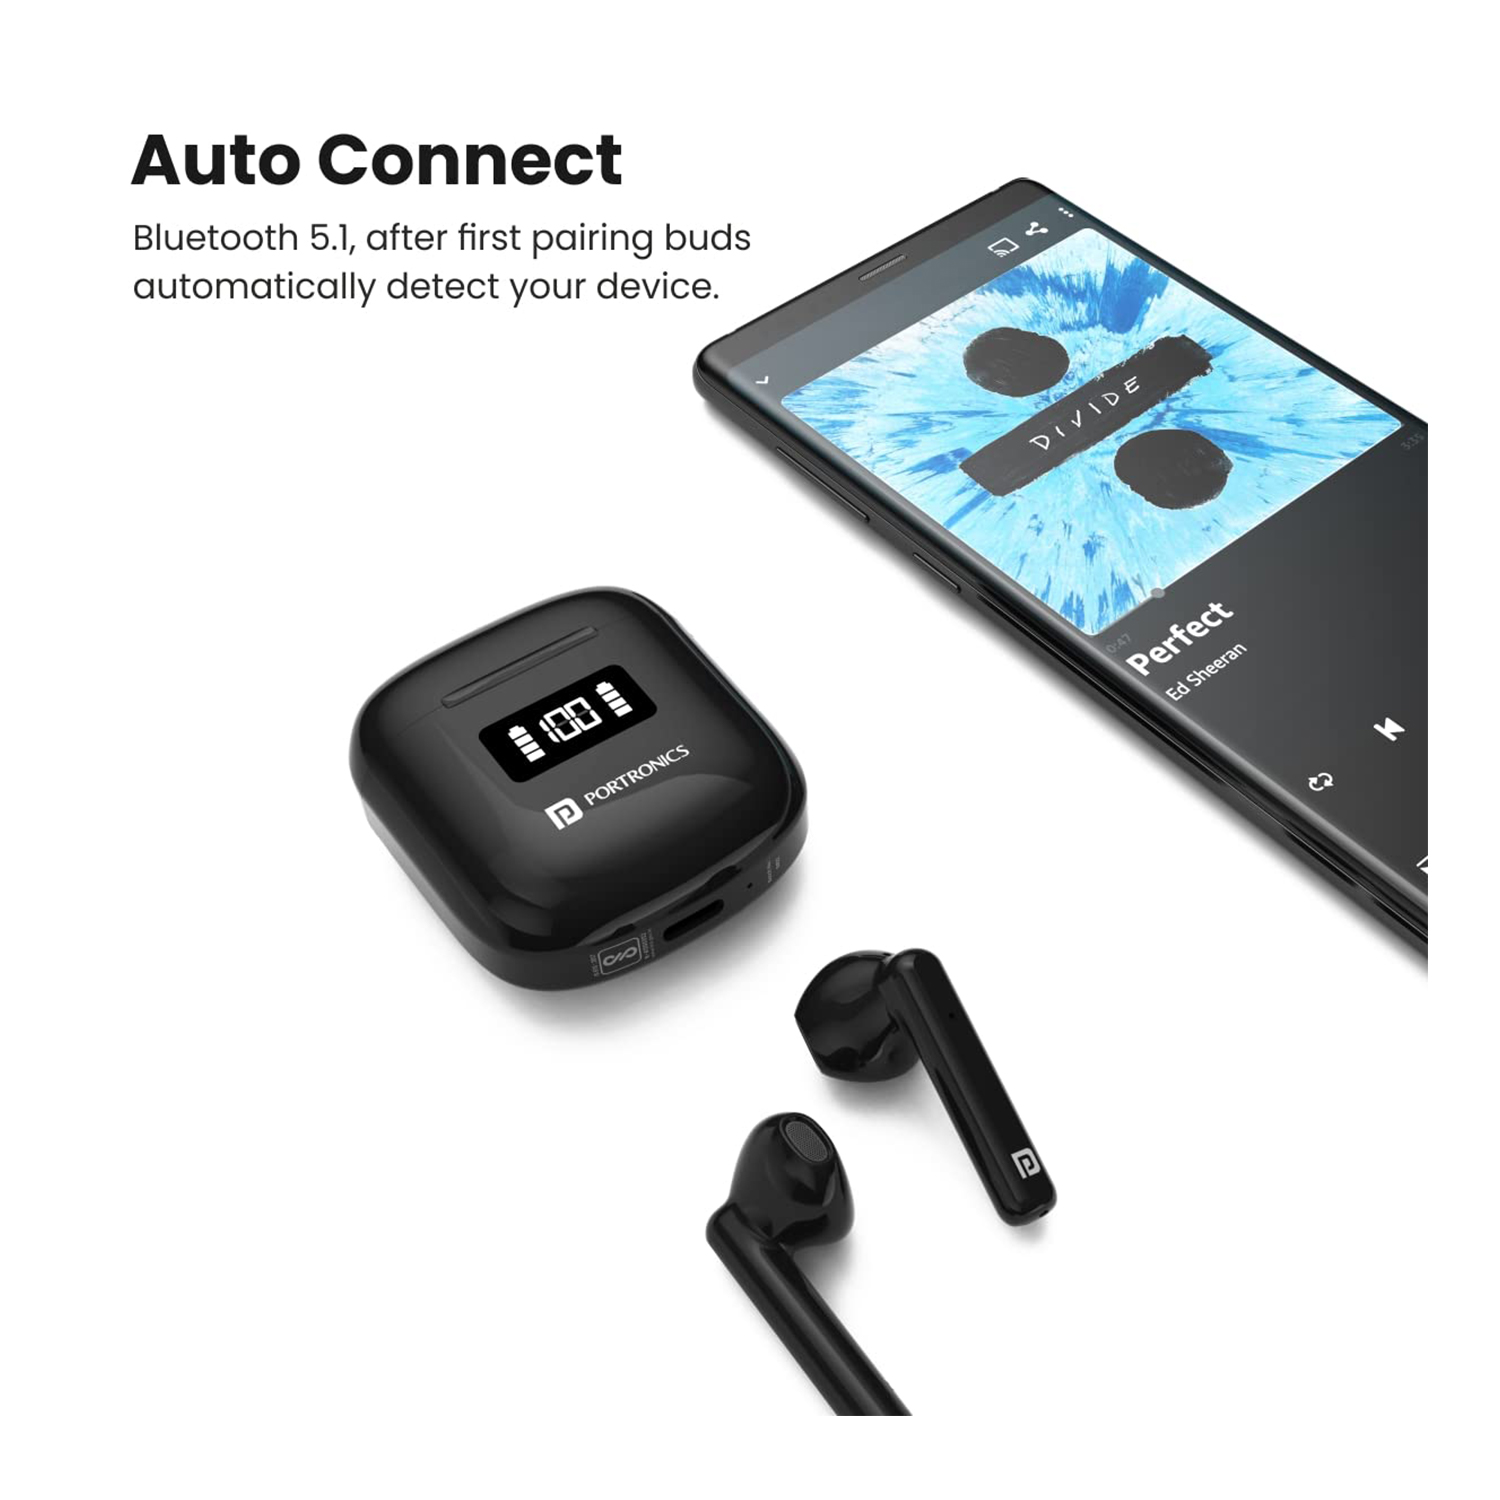 Portronics Harmonics Twins 26 TWS Earbuds with ENC, Bluetooth 5.1, 13mm Driver, 27Hrs Playtime, Digital Display, Type C Charging, Dual Mic.(Black)